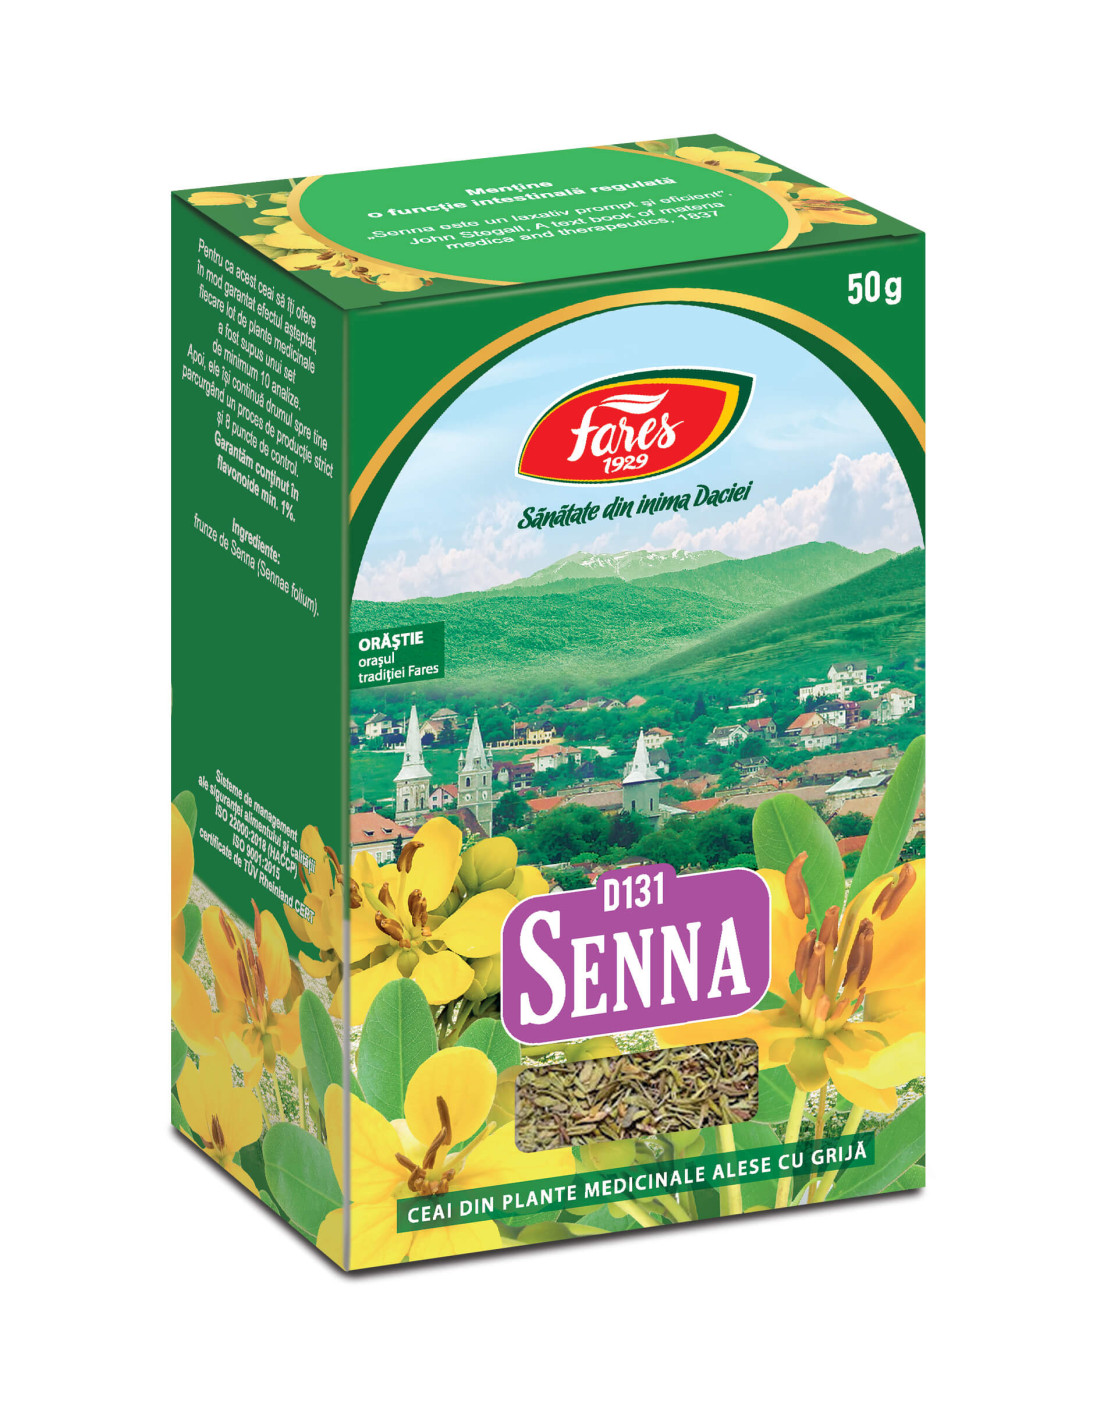 Ceaiuri - Ceai Senna Frunze, Vrac, Fares, farmacieieftina.ro